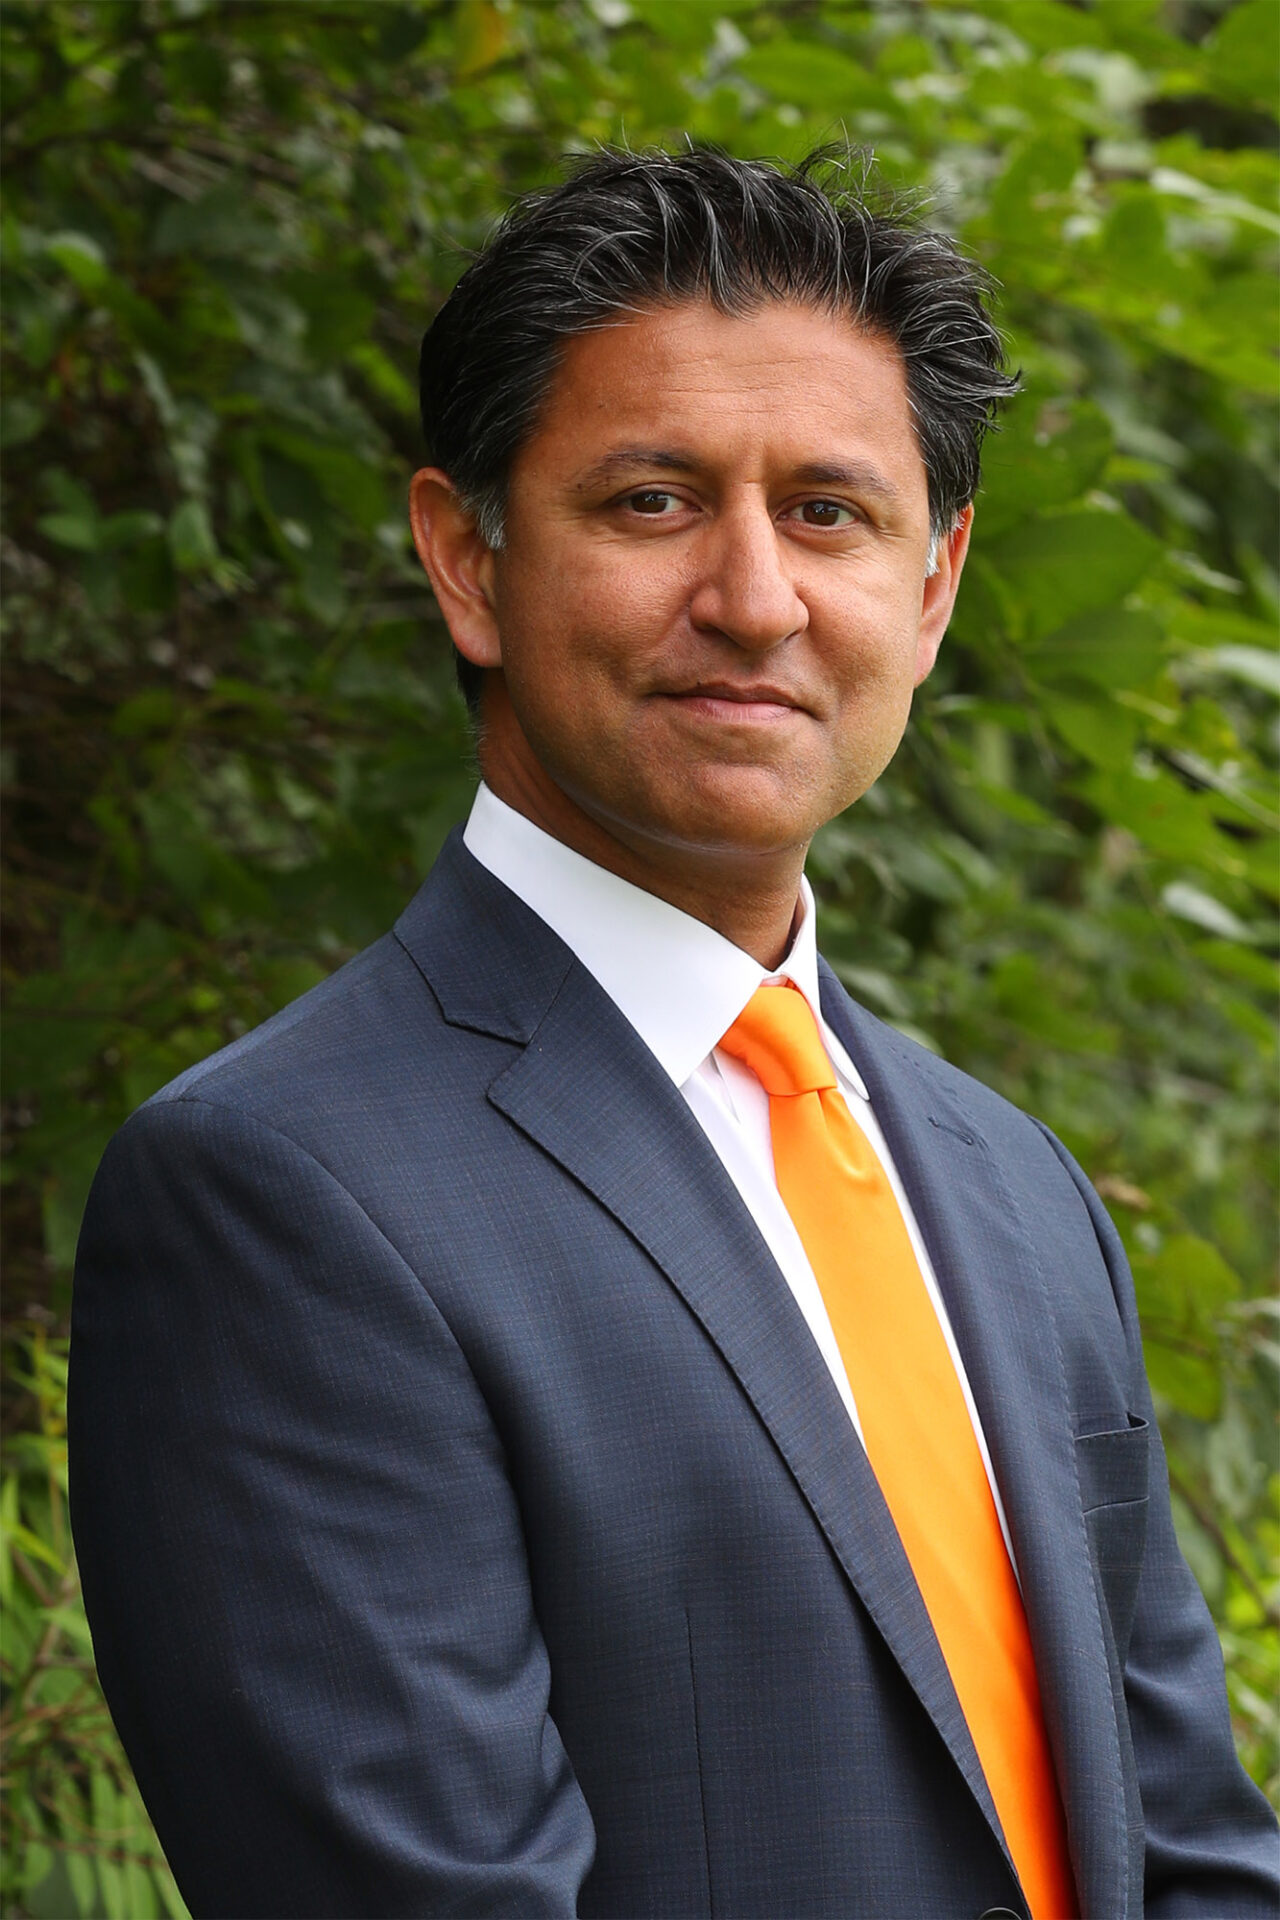 Faisal Khan, Chief Digital and Information Officer